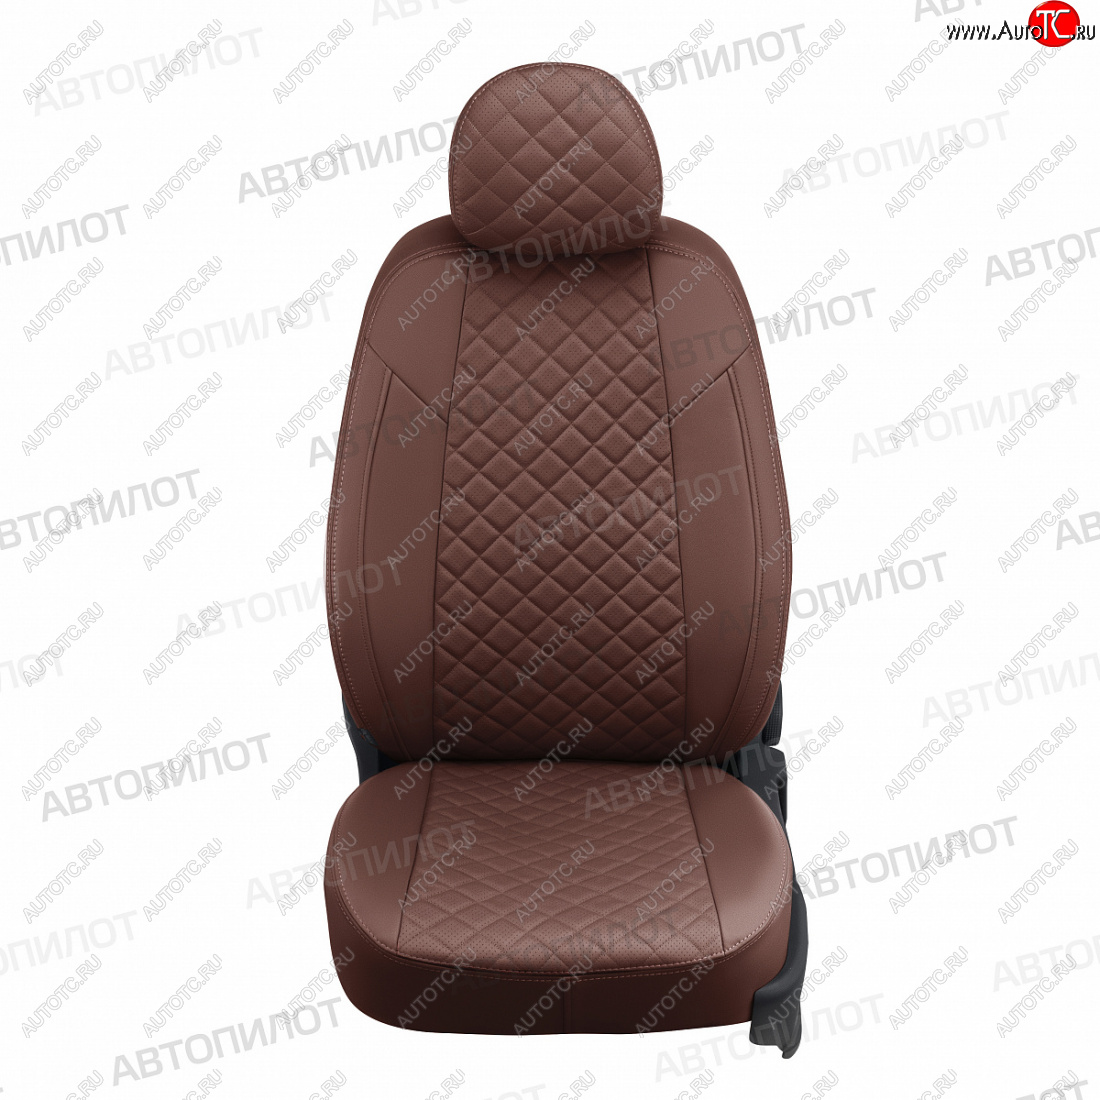 13 999 р. Чехлы сидений (экокожа) Автопилот Ромб  KIA Cerato  1 LD (2003-2008) (темно-коричневый)